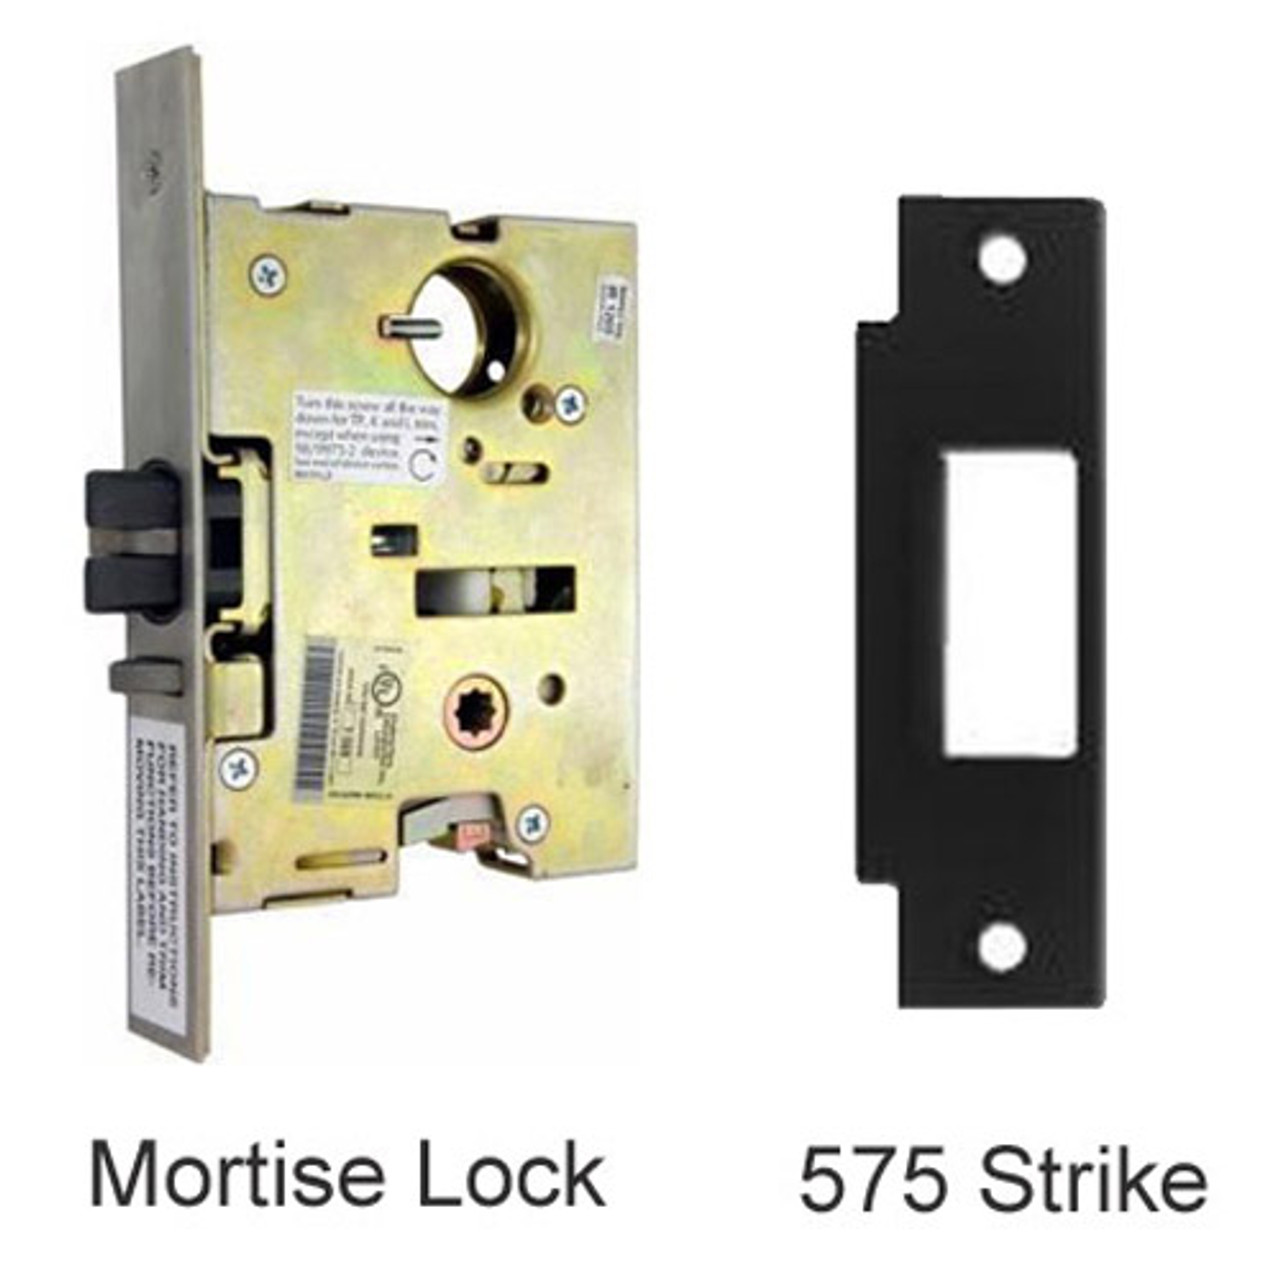 EL9875DT-US3-4 Von Duprin Mortise Lock and Strike